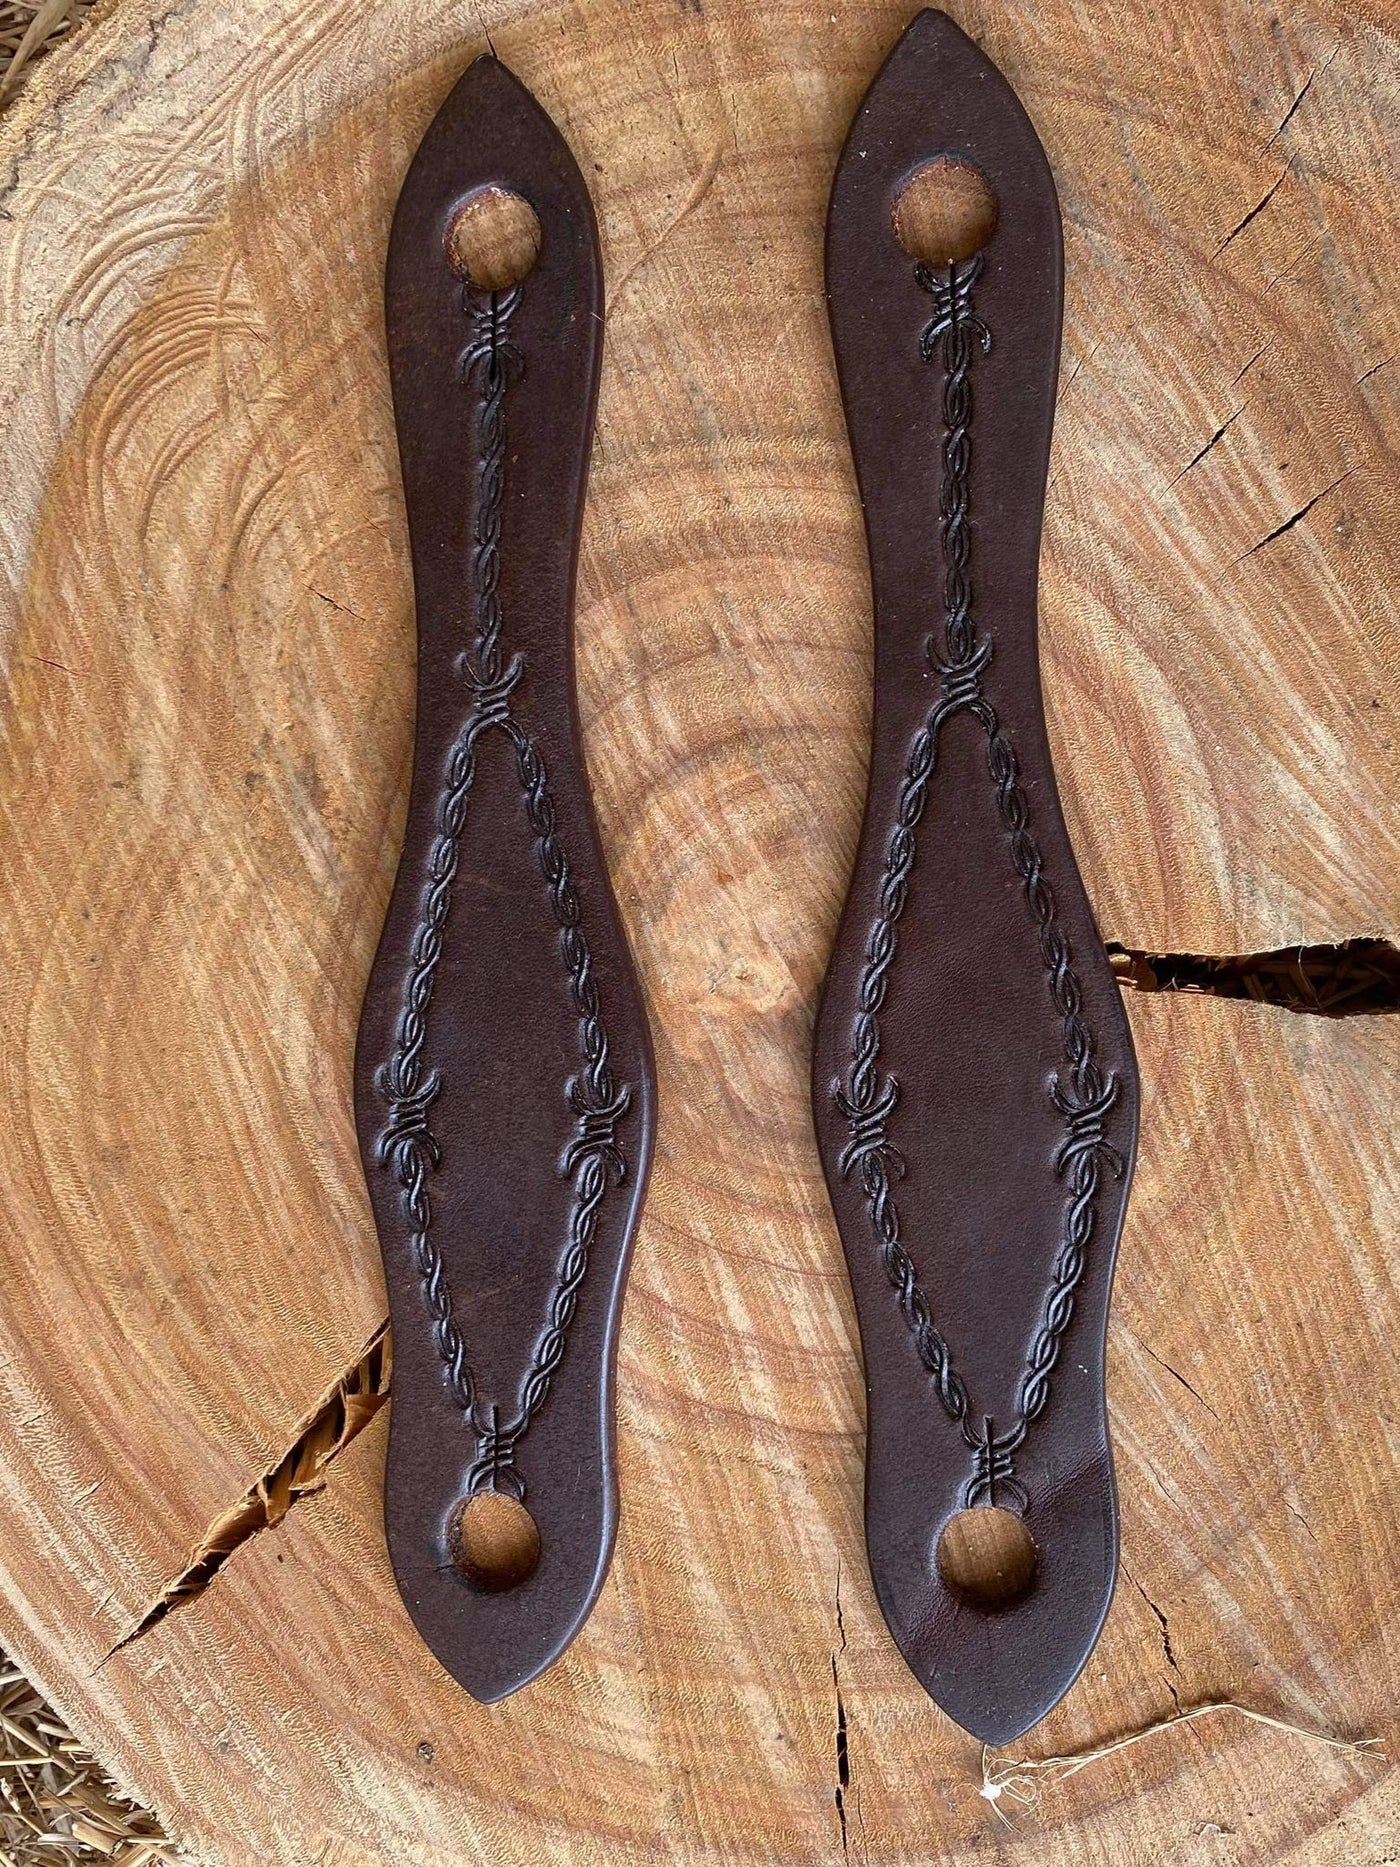 Slobber Strap - Barbwire tooled Dark leather slobber straps